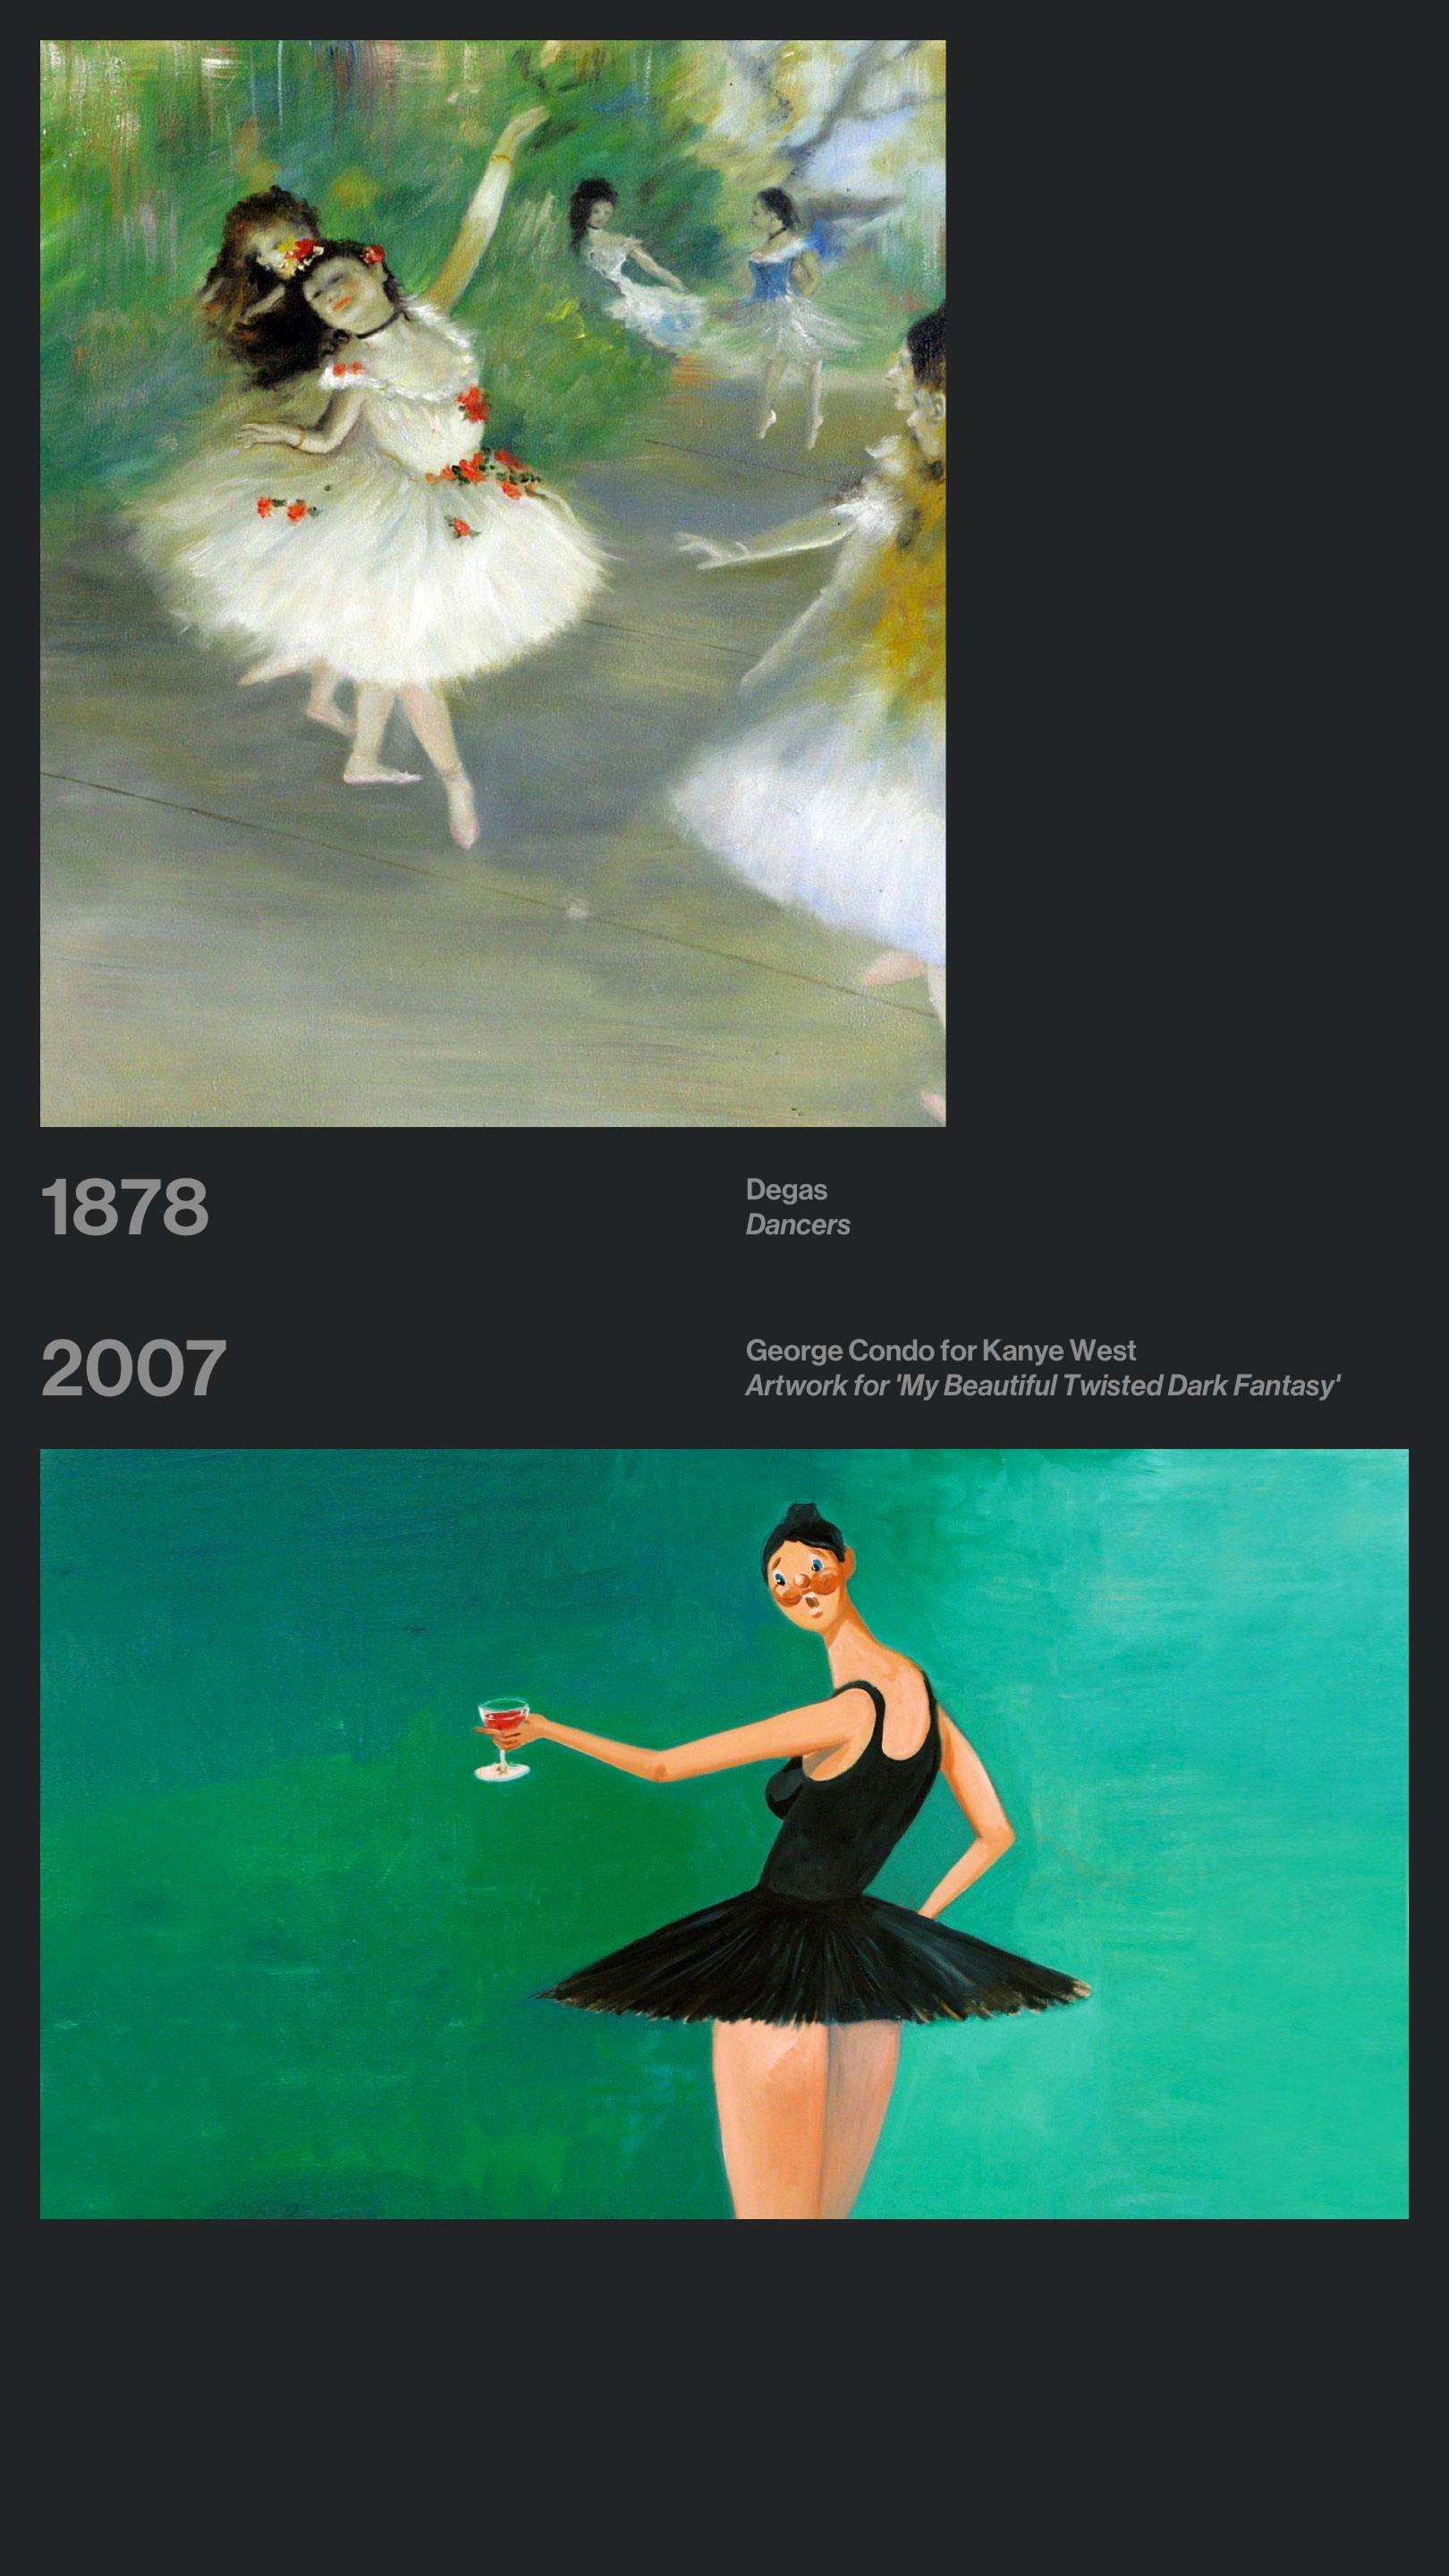 Degas vs Condo